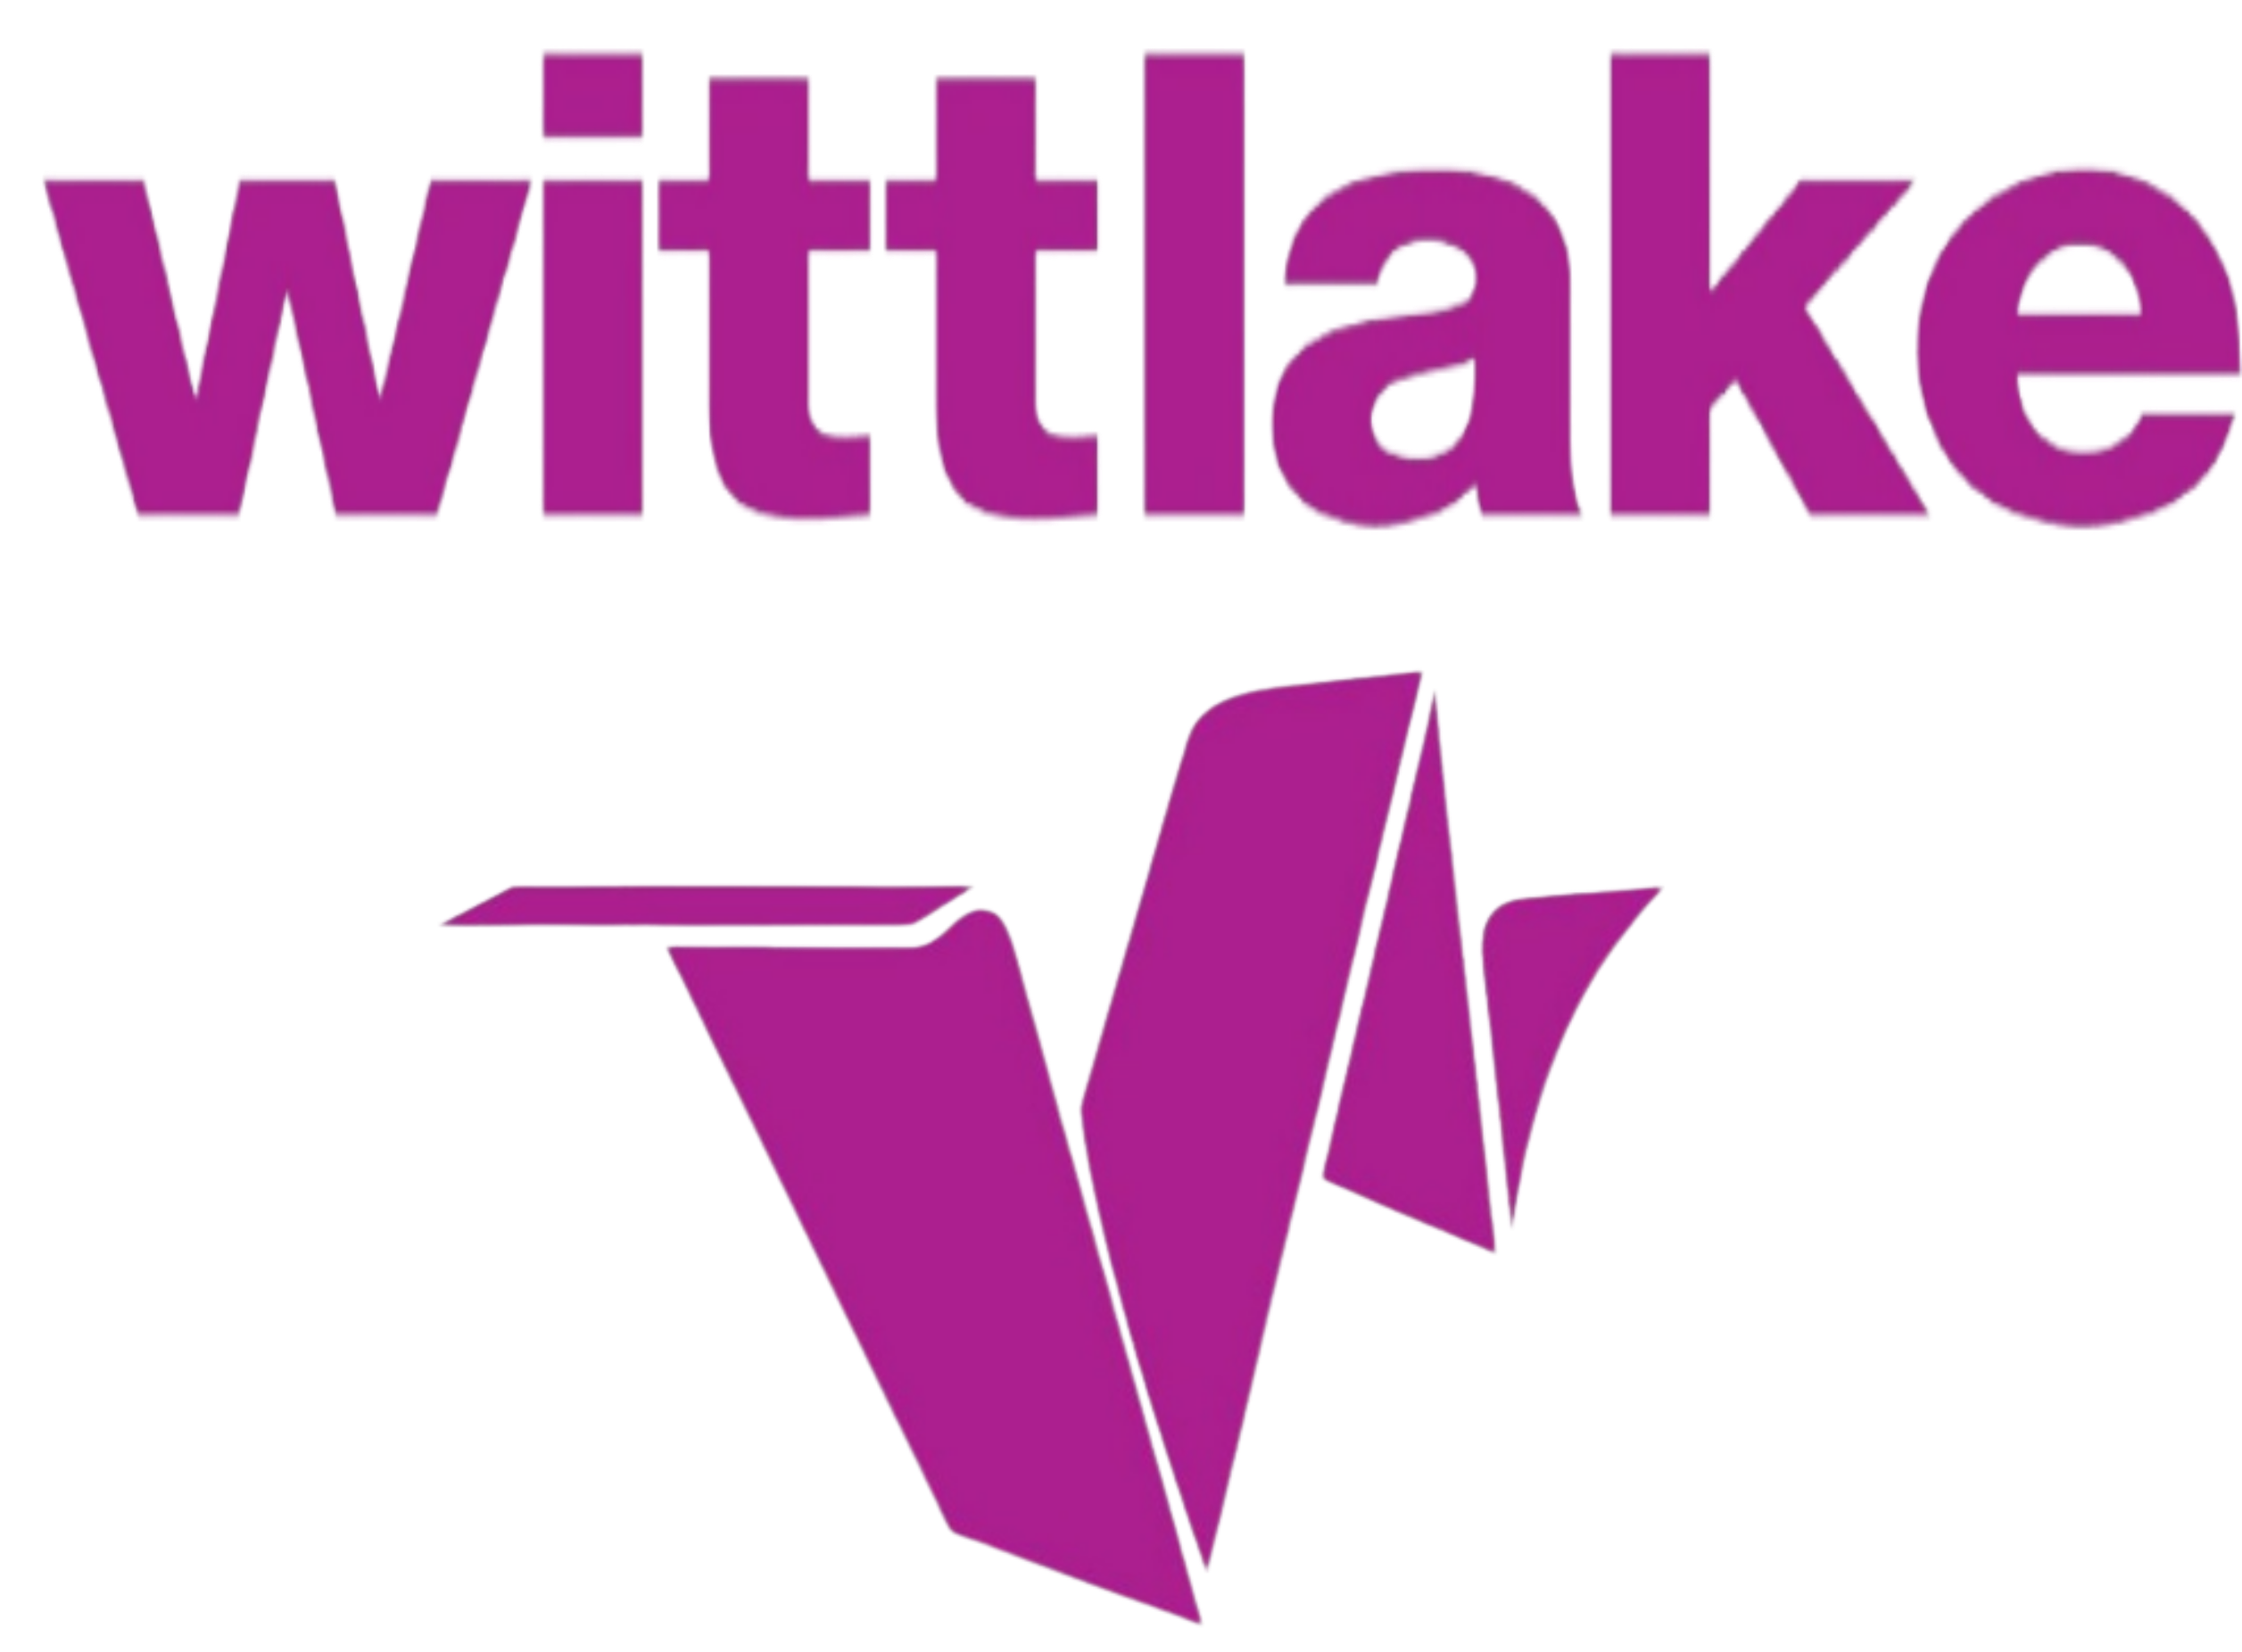 Wittlake Creative Bodenbeläge Logo